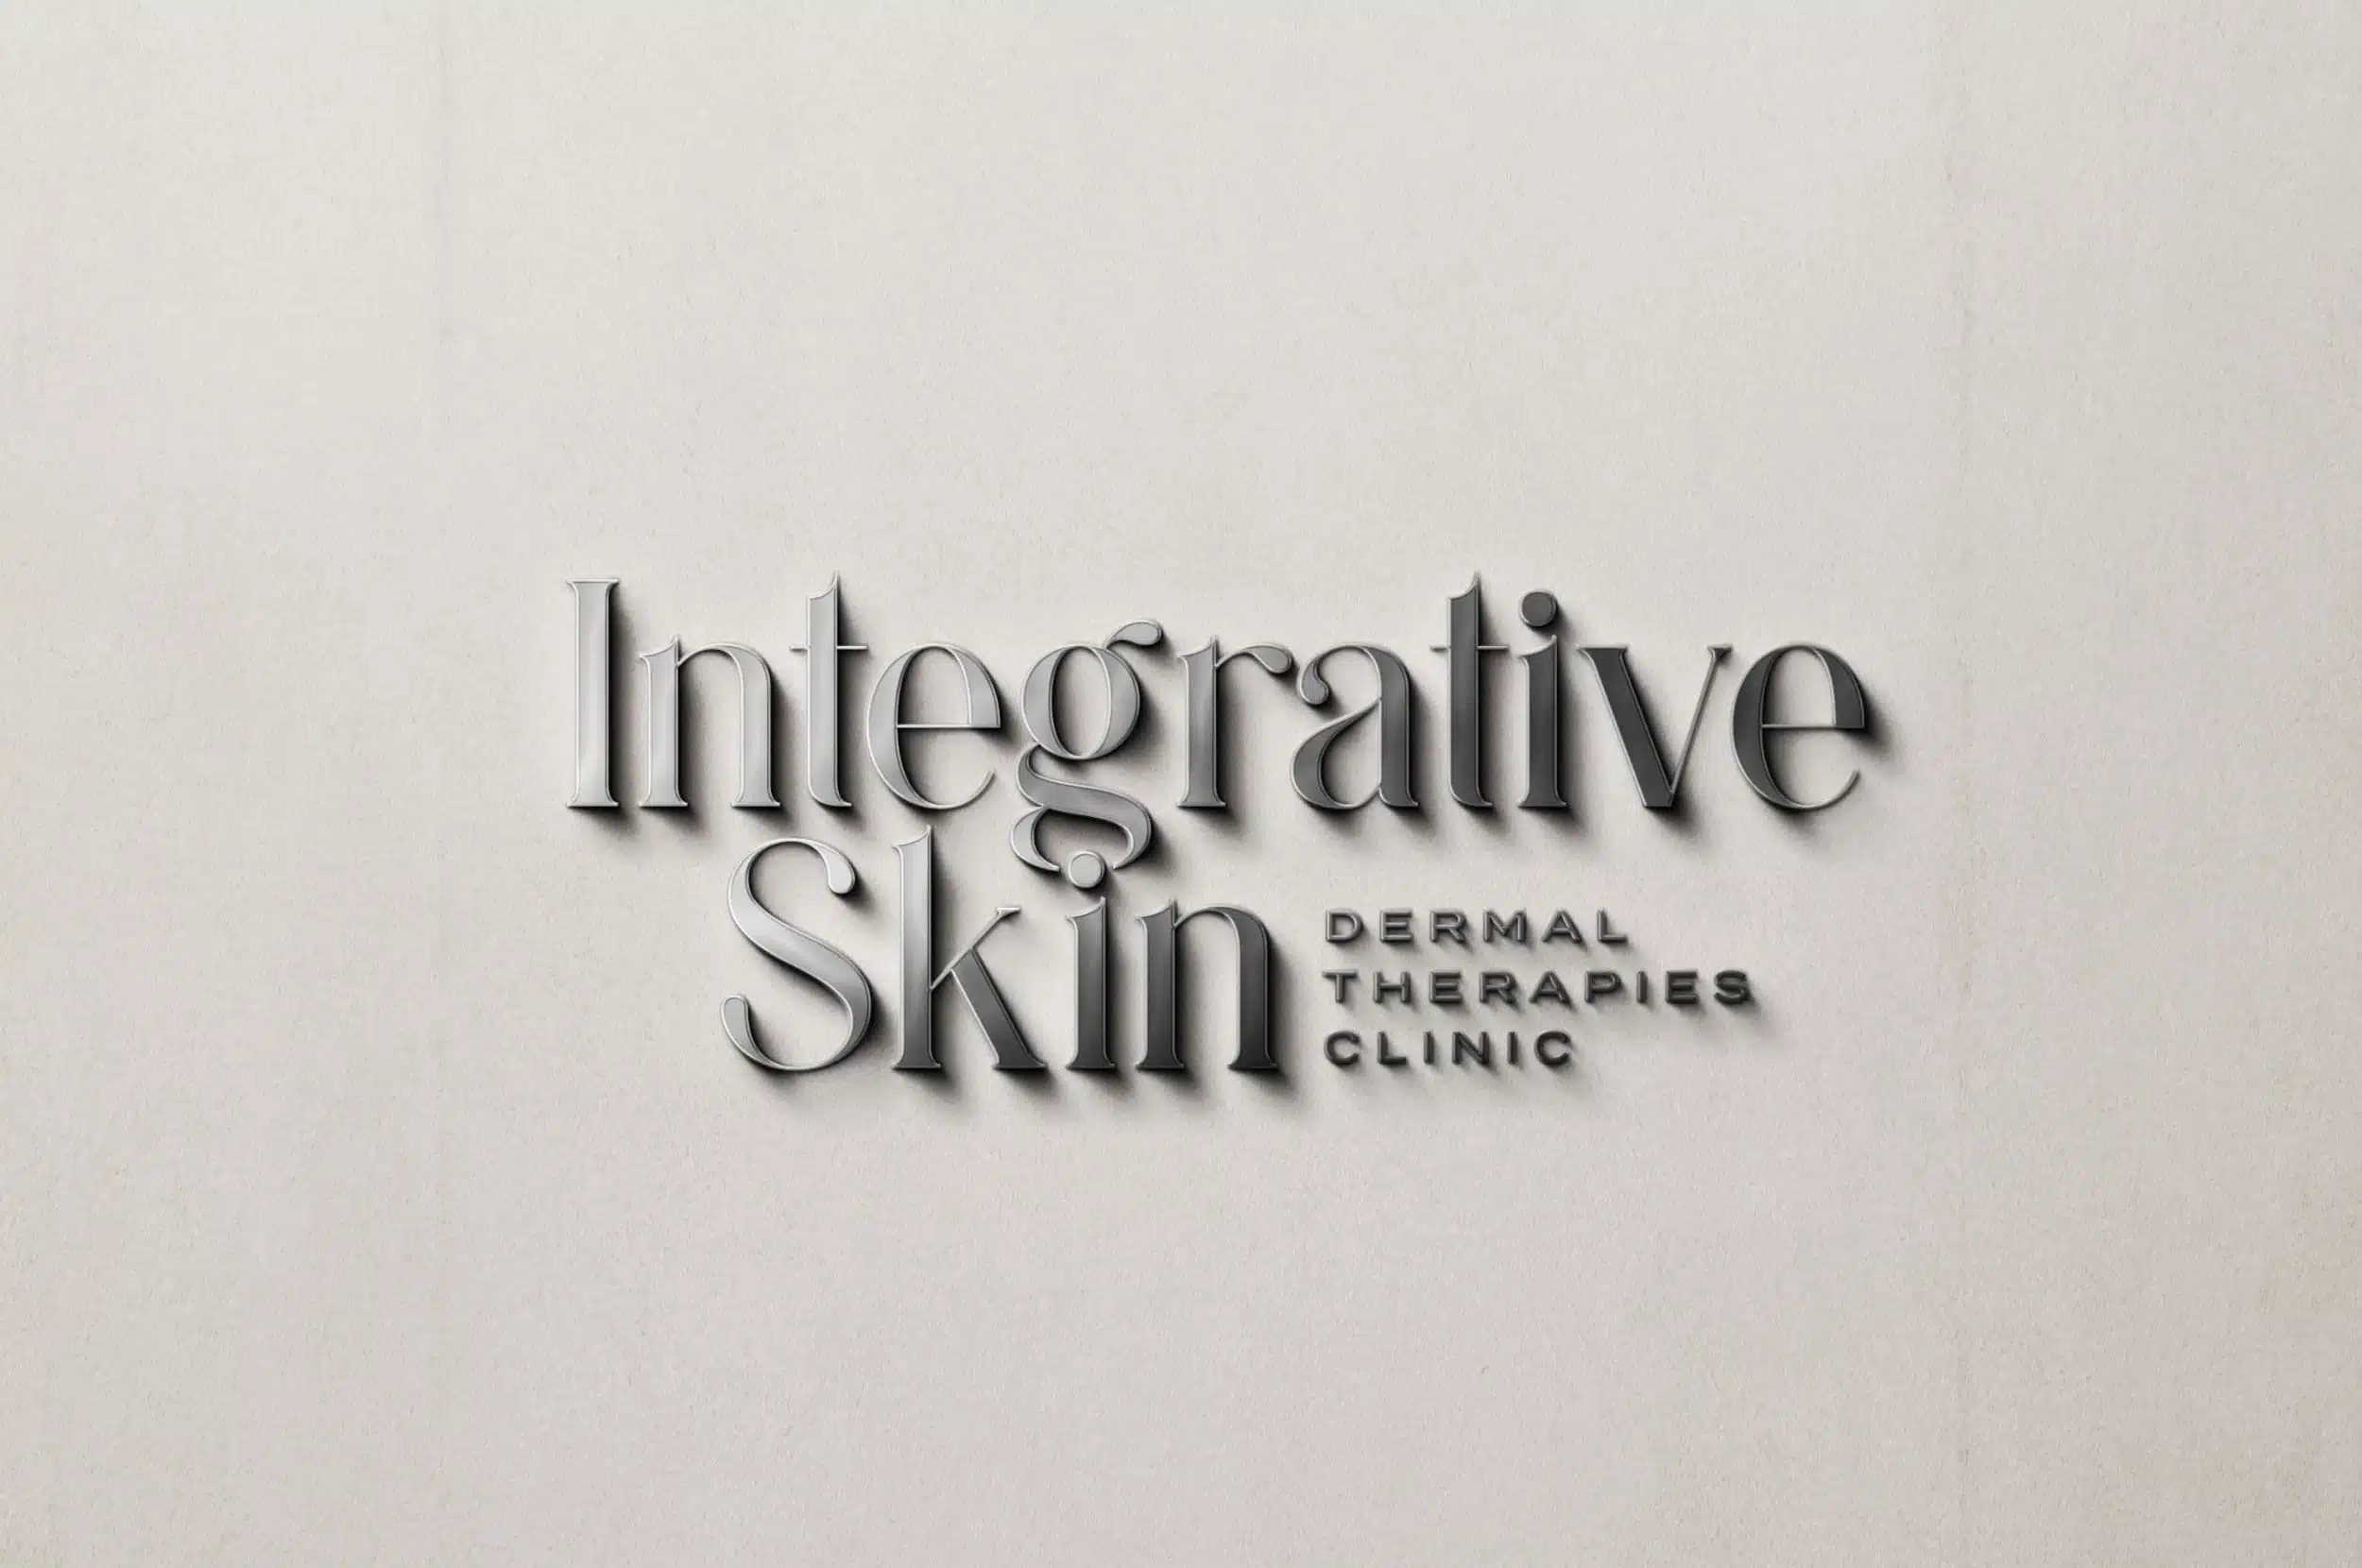 elegant and timeless skincare clinic brand identity